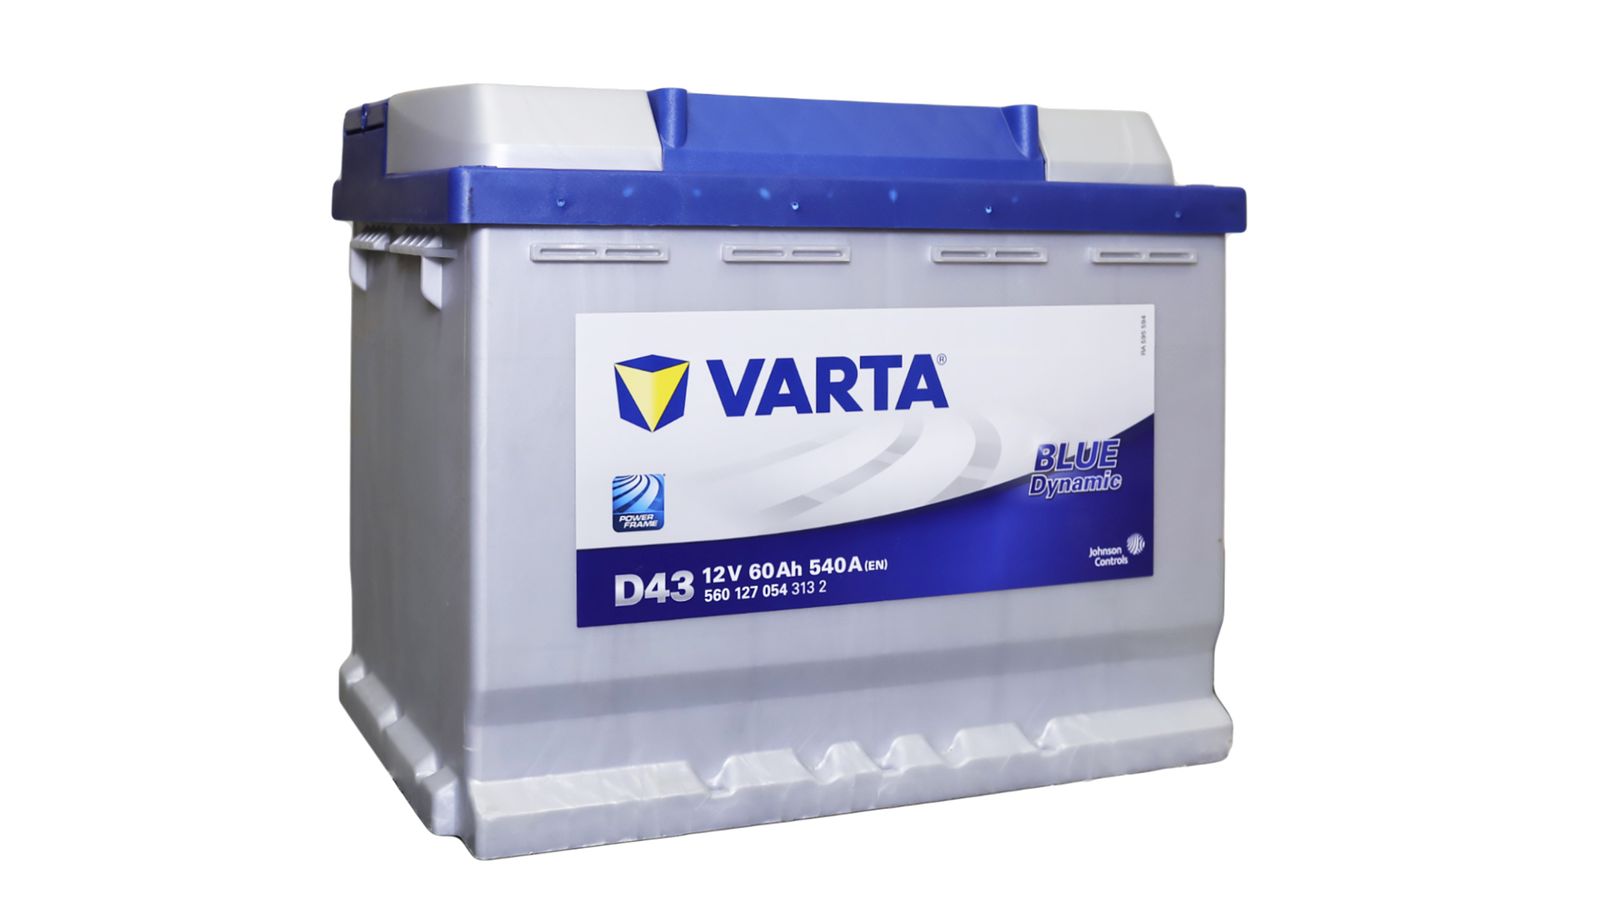 Аккумуляторная батарея VARTA BLUE 6СТ60 D43 * 560 127 054 540 А фотография №2